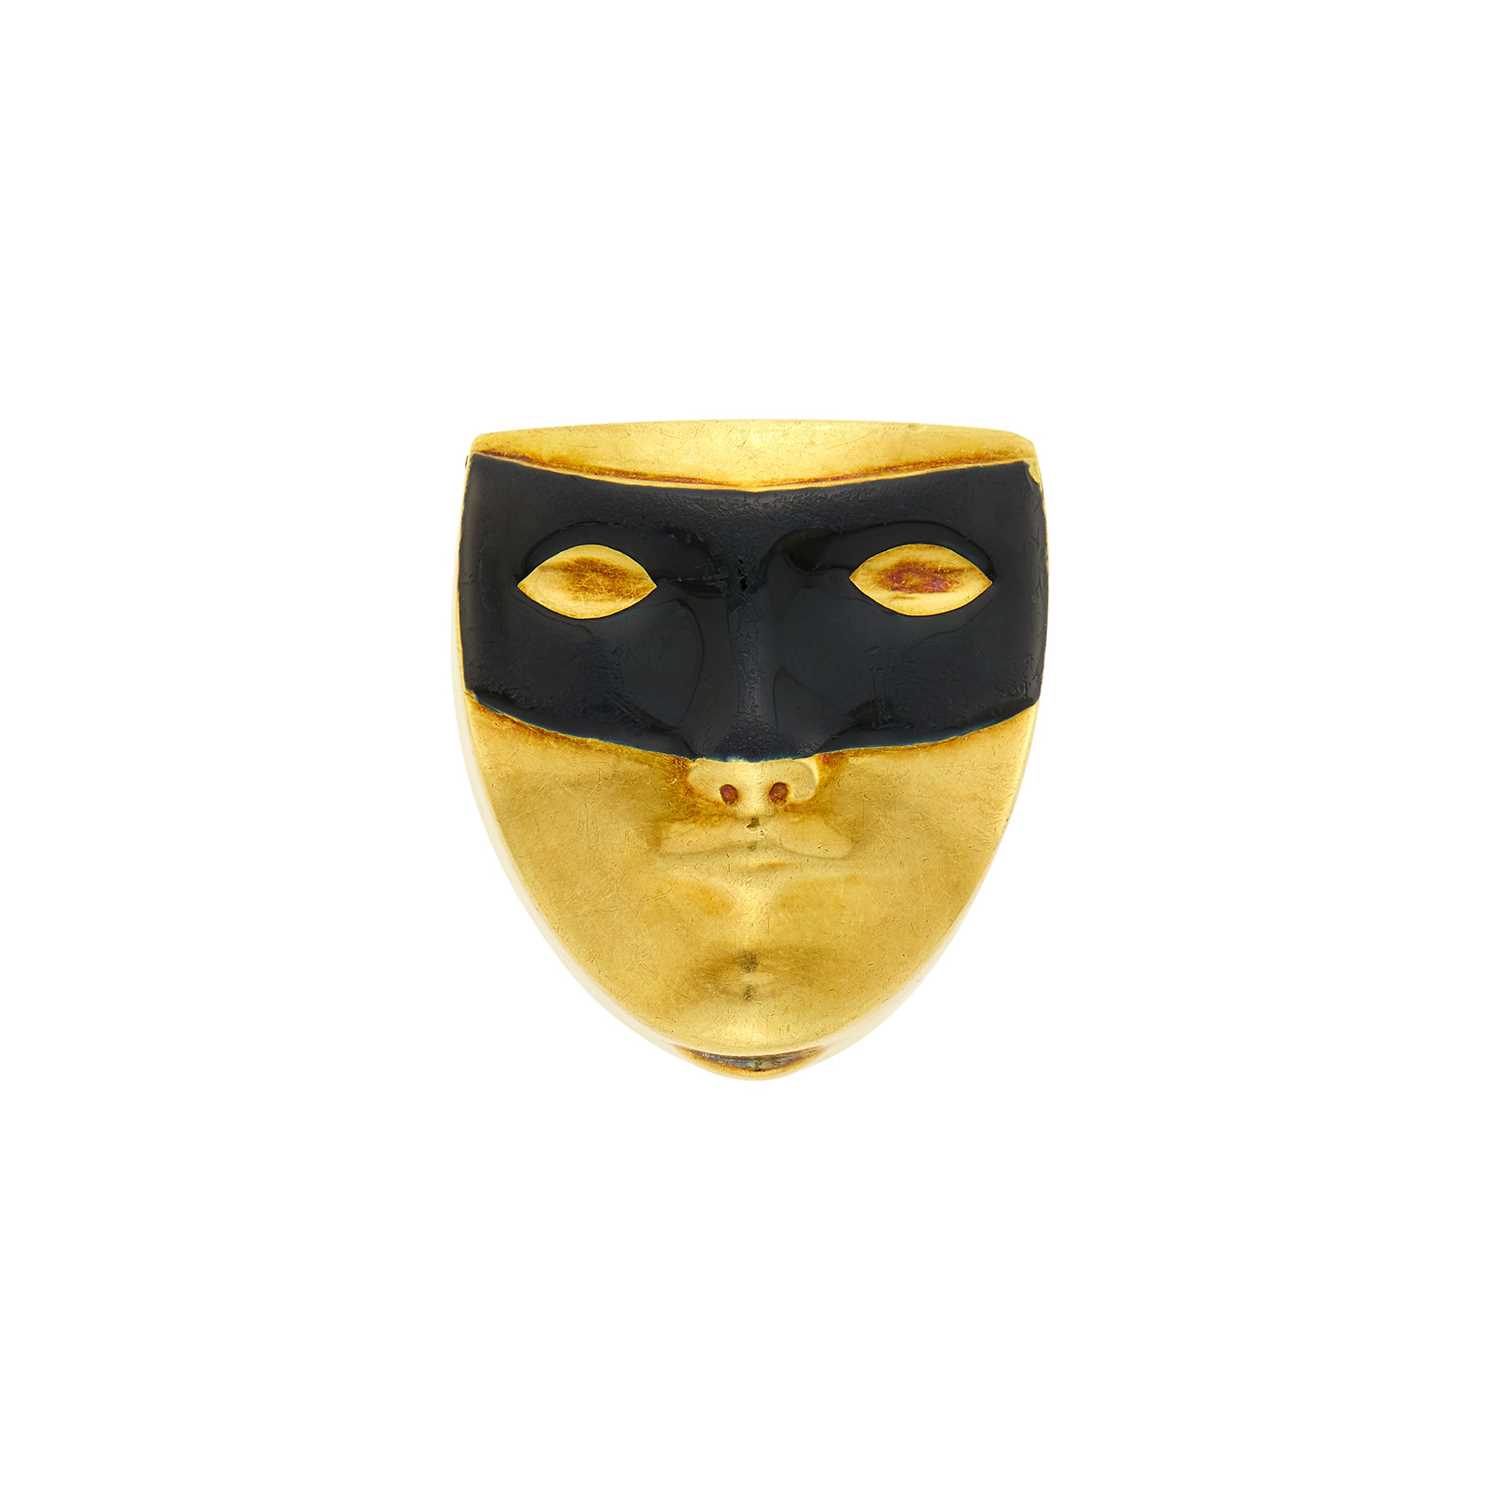 Lot 110 - Verdura Gold and Black Enamel Mask Pillbox